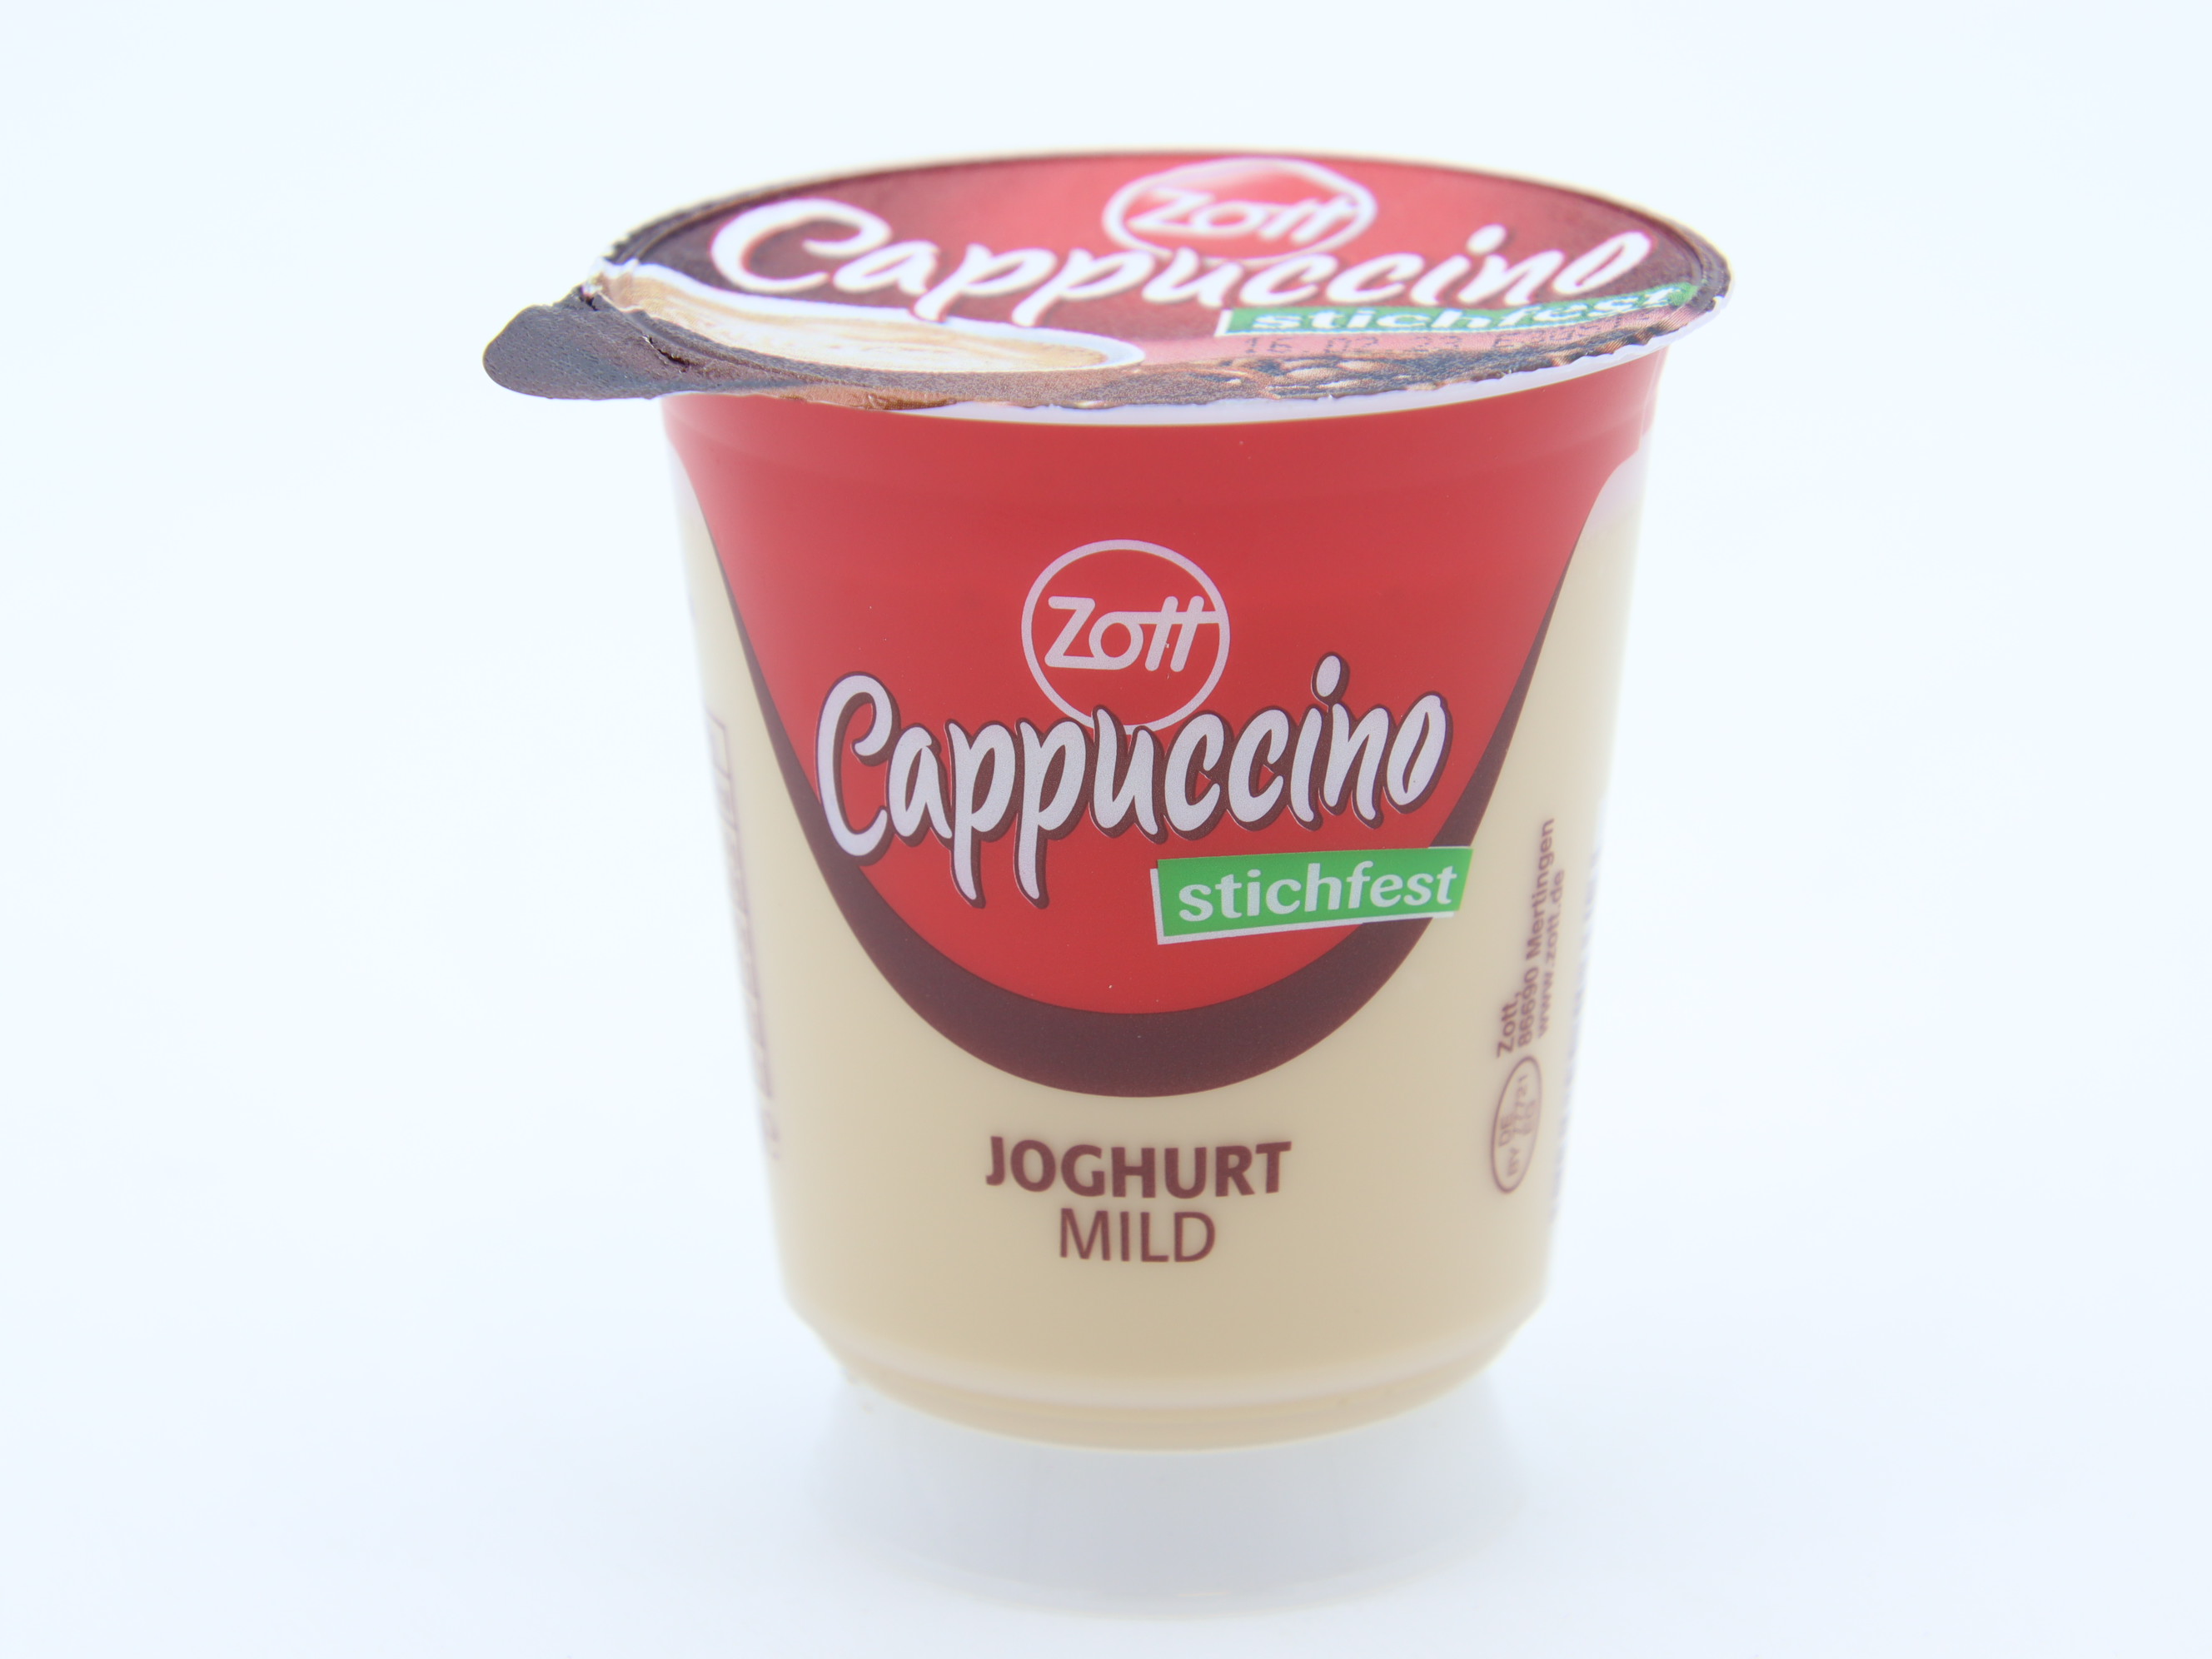 Zott jogurt 150g - Cappuccino